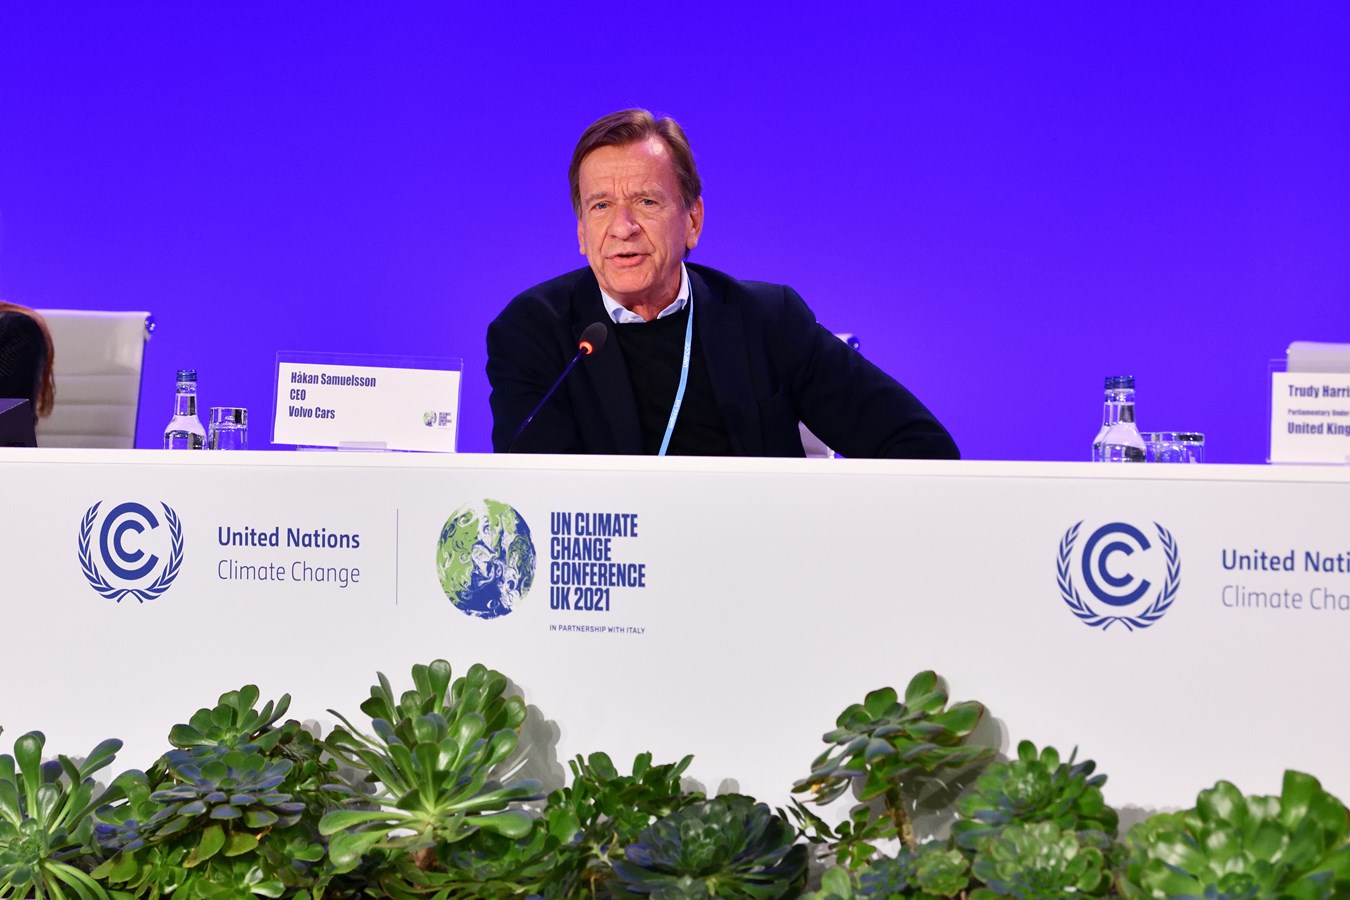 Håkan Samuelsson, President and CEO of Volvo Cars, addresses delegates at COP26